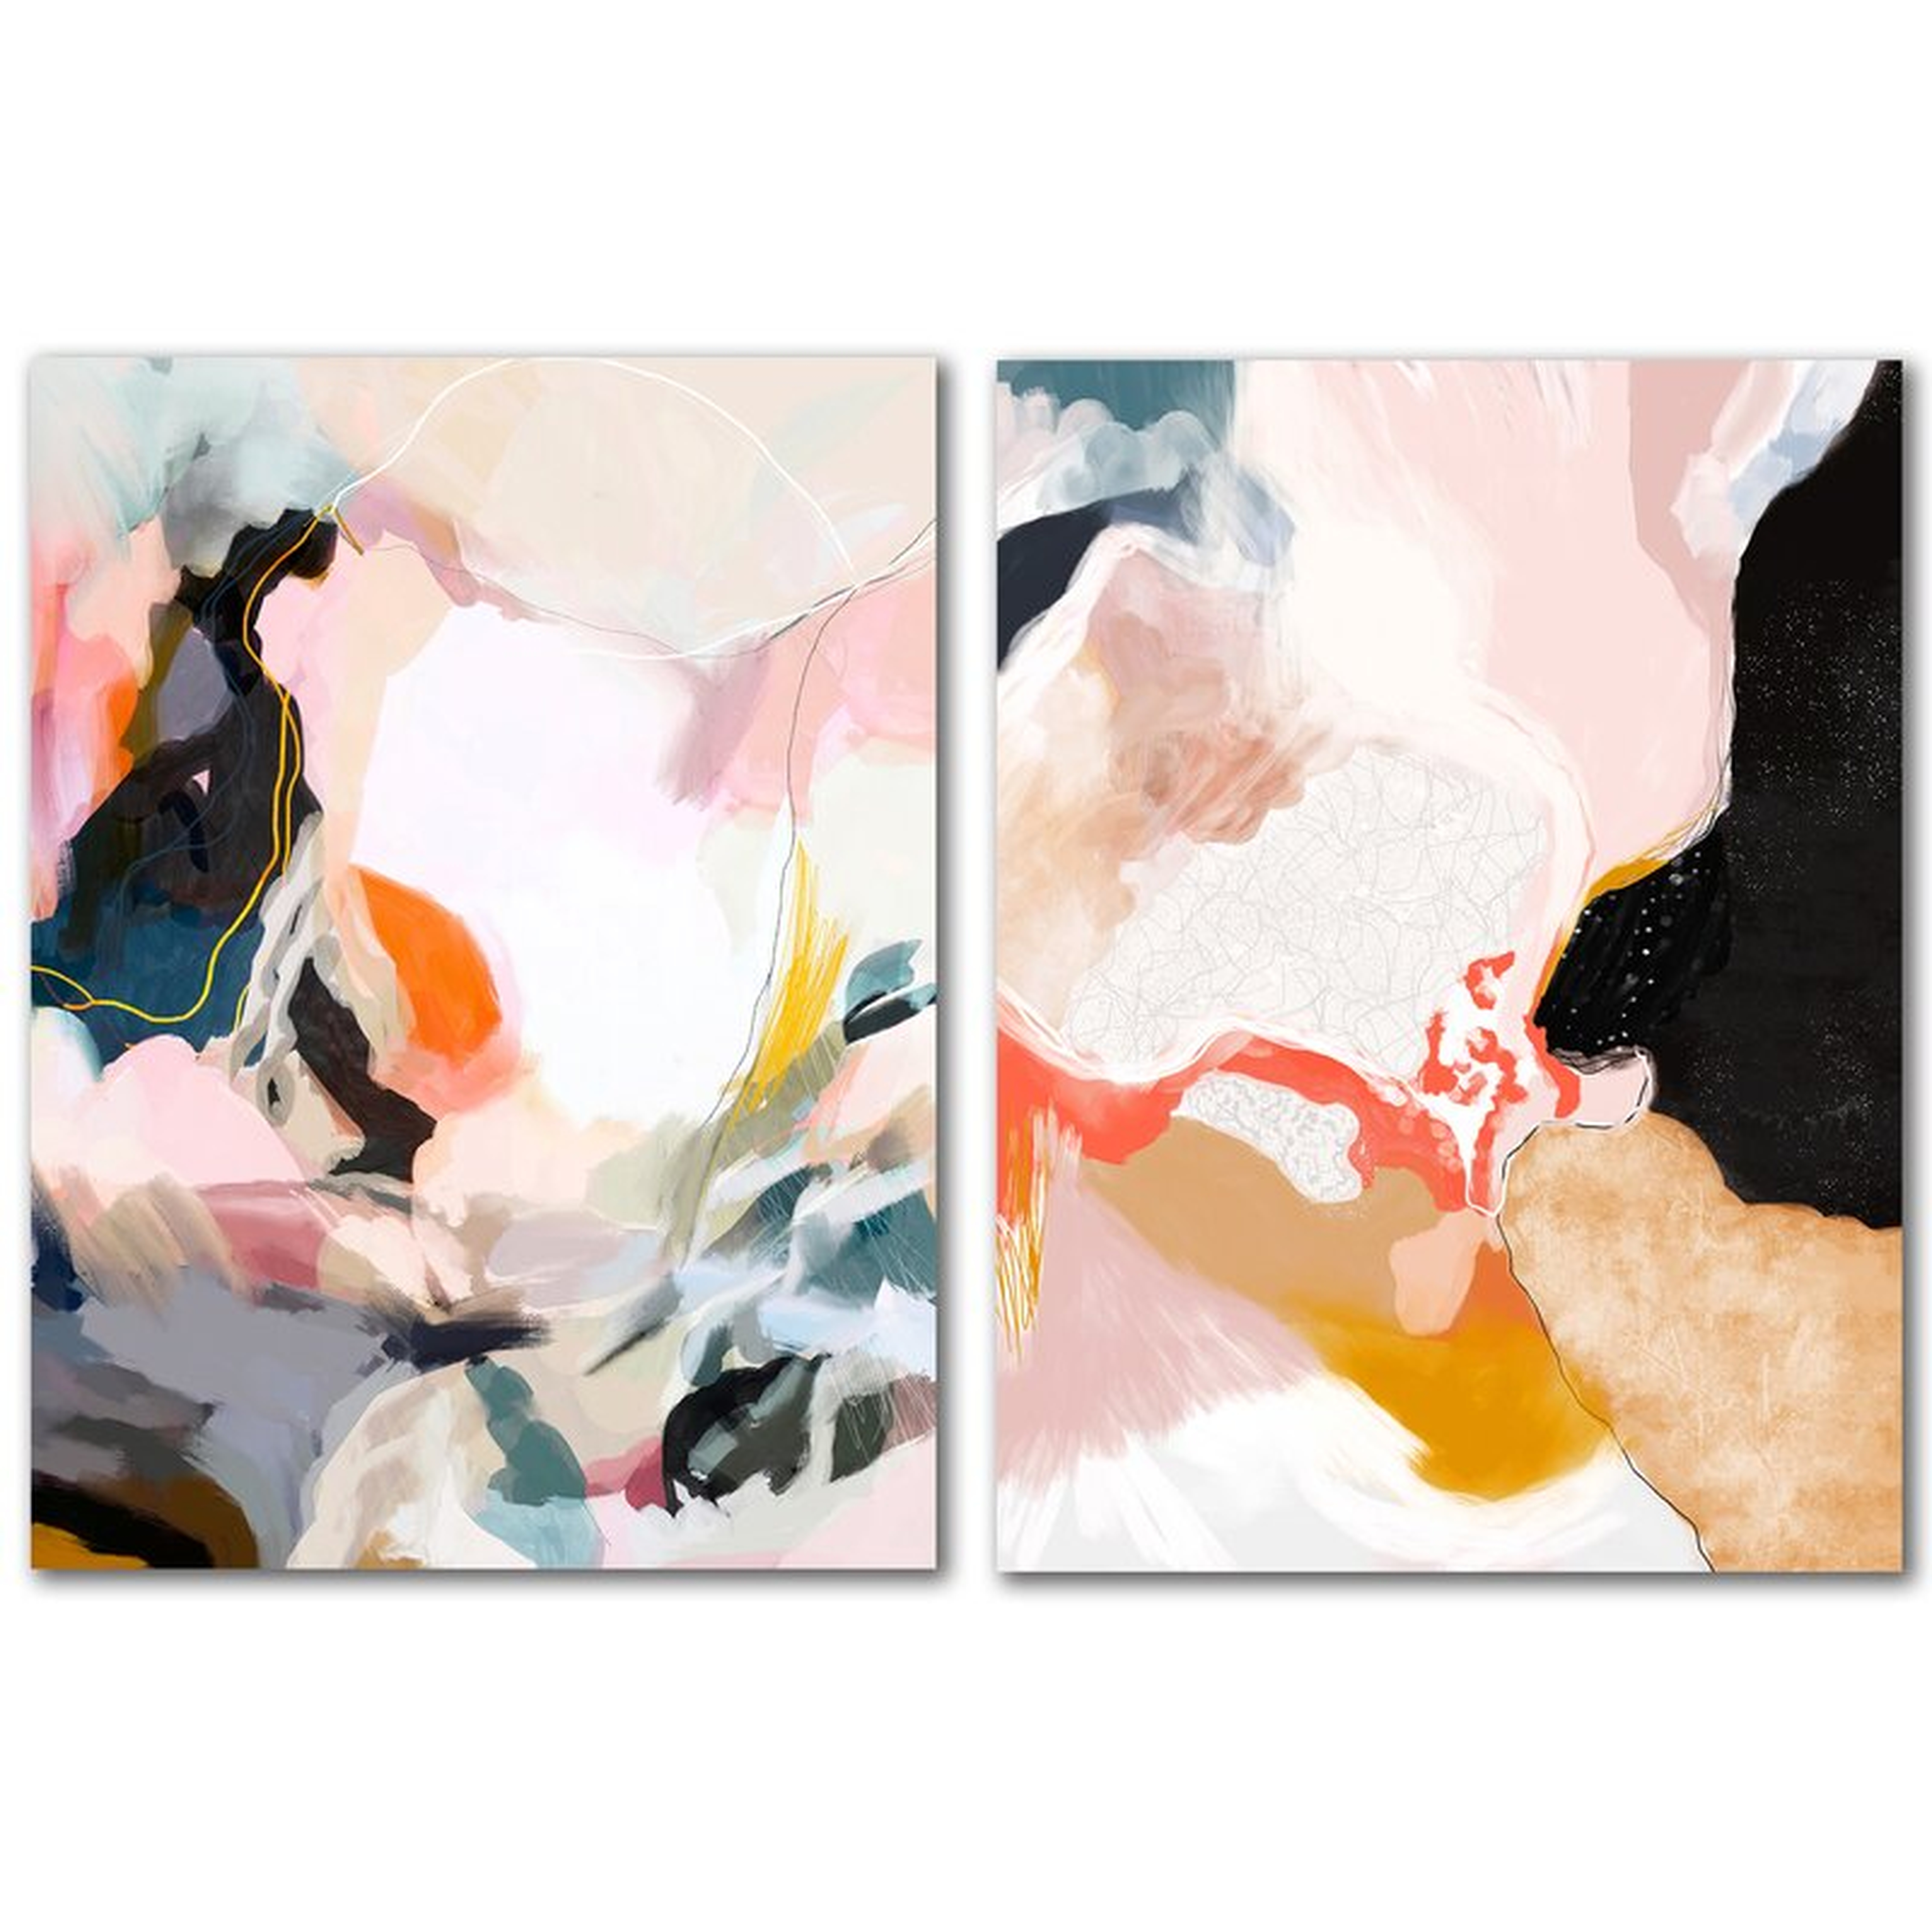 Apricot Dawn by Louise Robinson - 2 Piece Print Set on Canvas - Wayfair